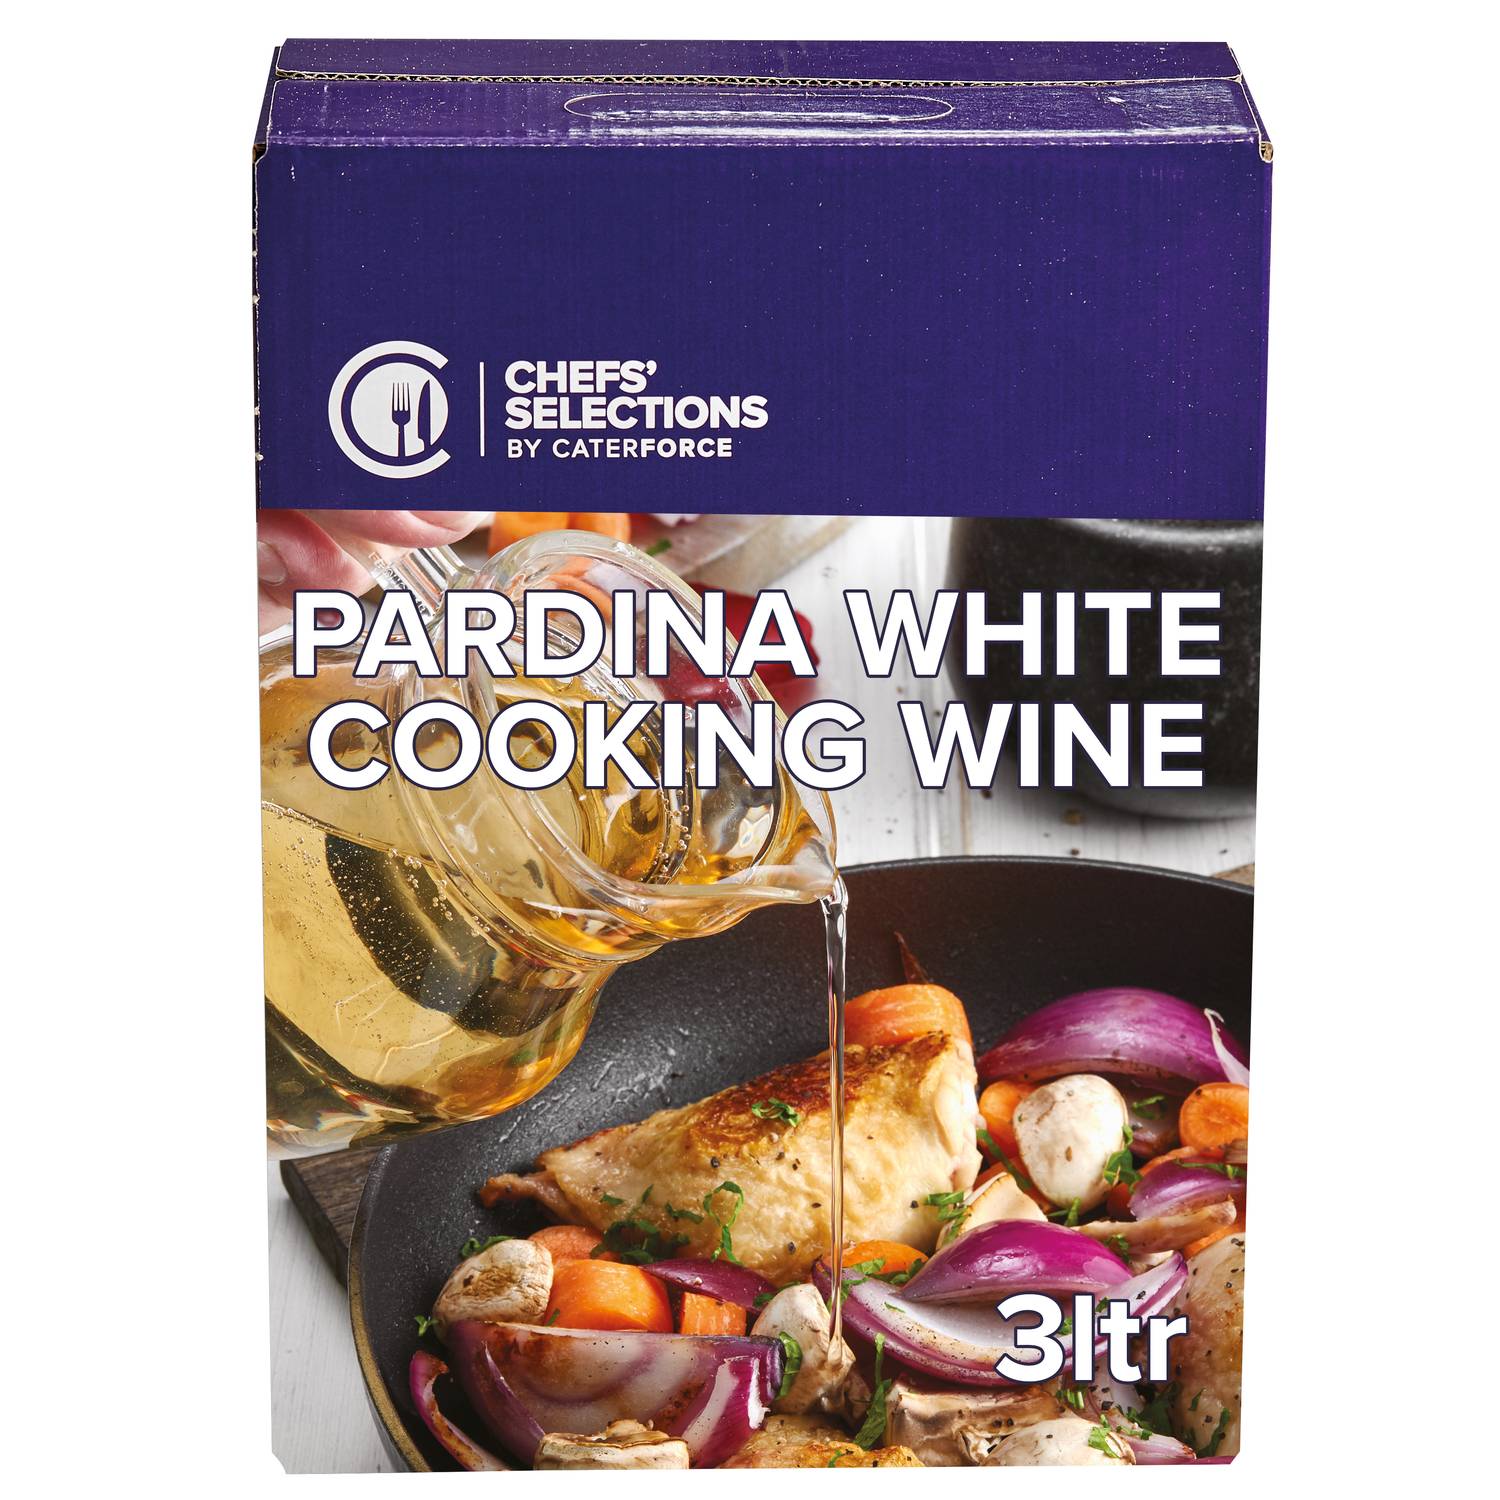 Chefs’ Selections Pardina White Cooking Wine BIB (4 x 3L)